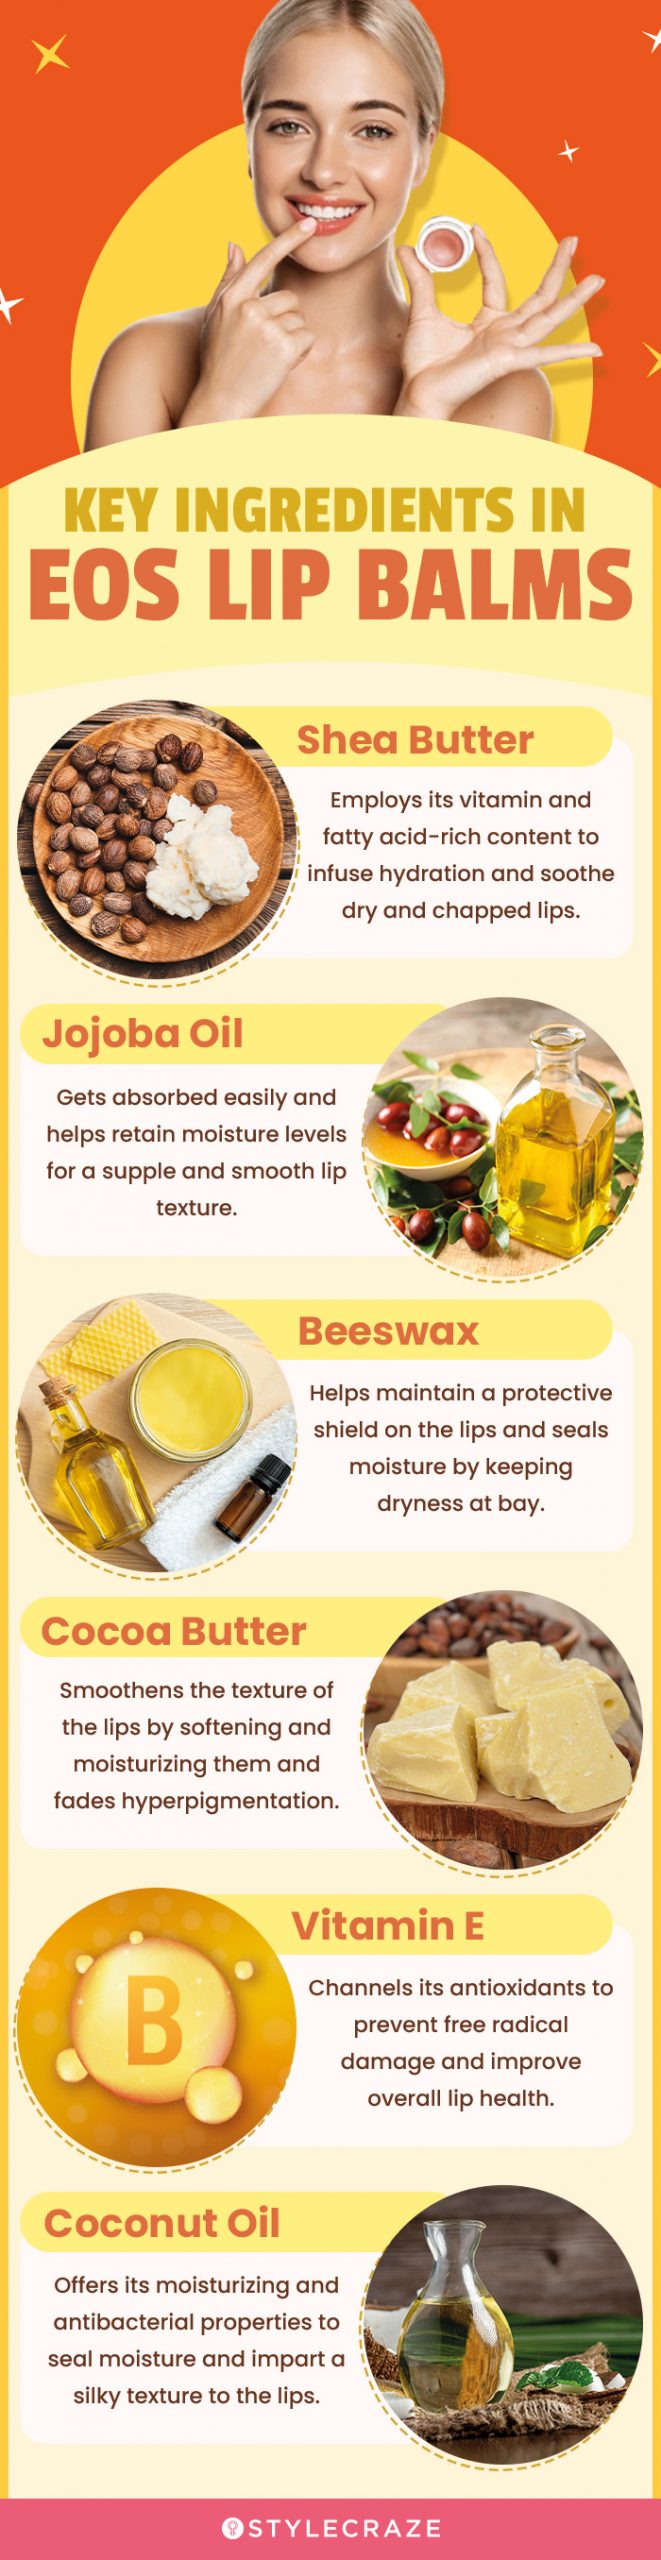 Key Ingredients In EOS Lip Balms(infographic)